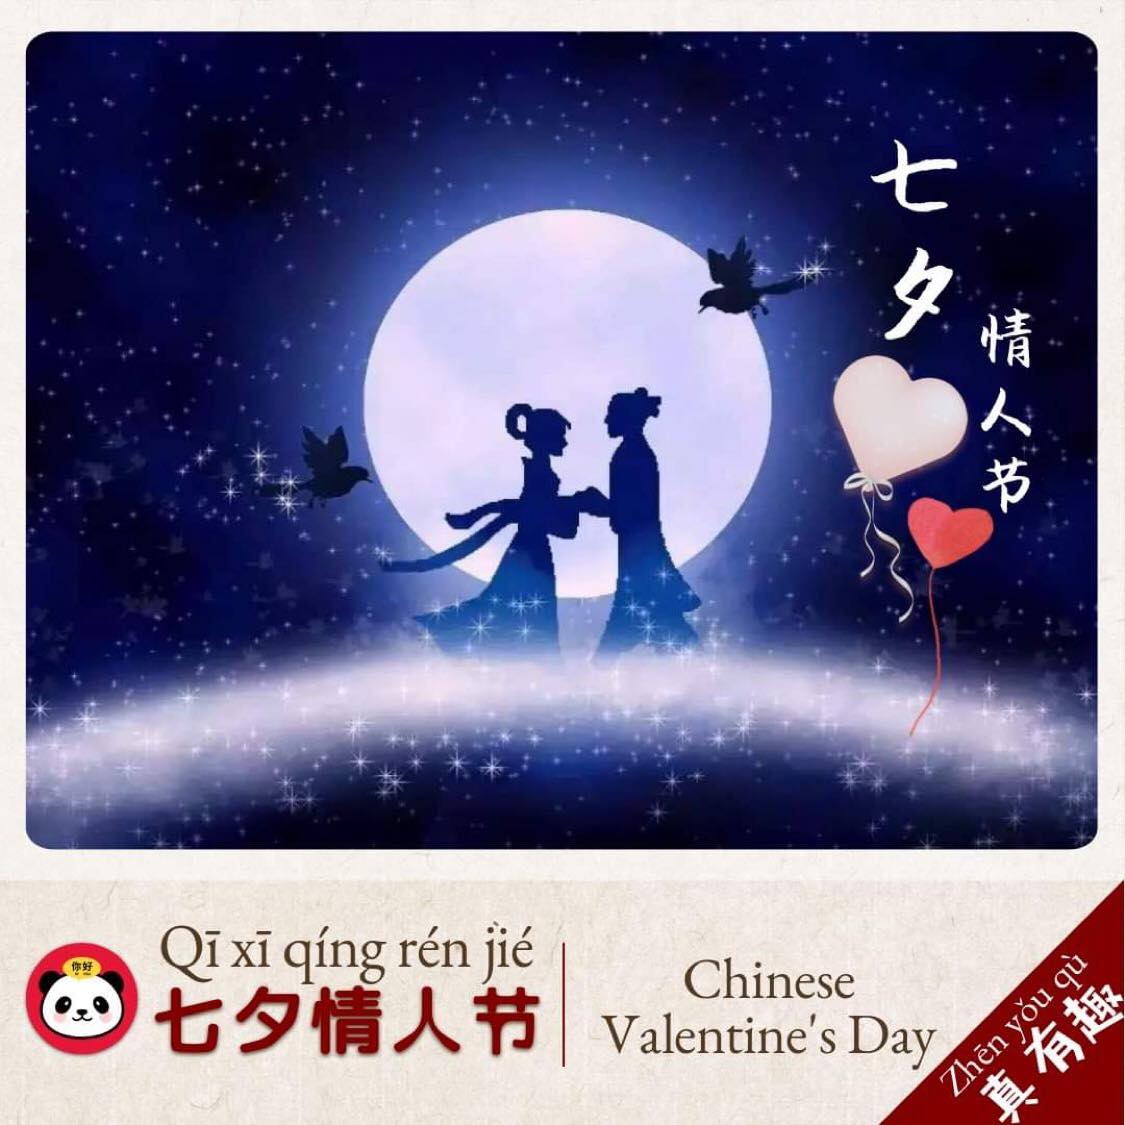 Happy Chinese Valentine’s Day